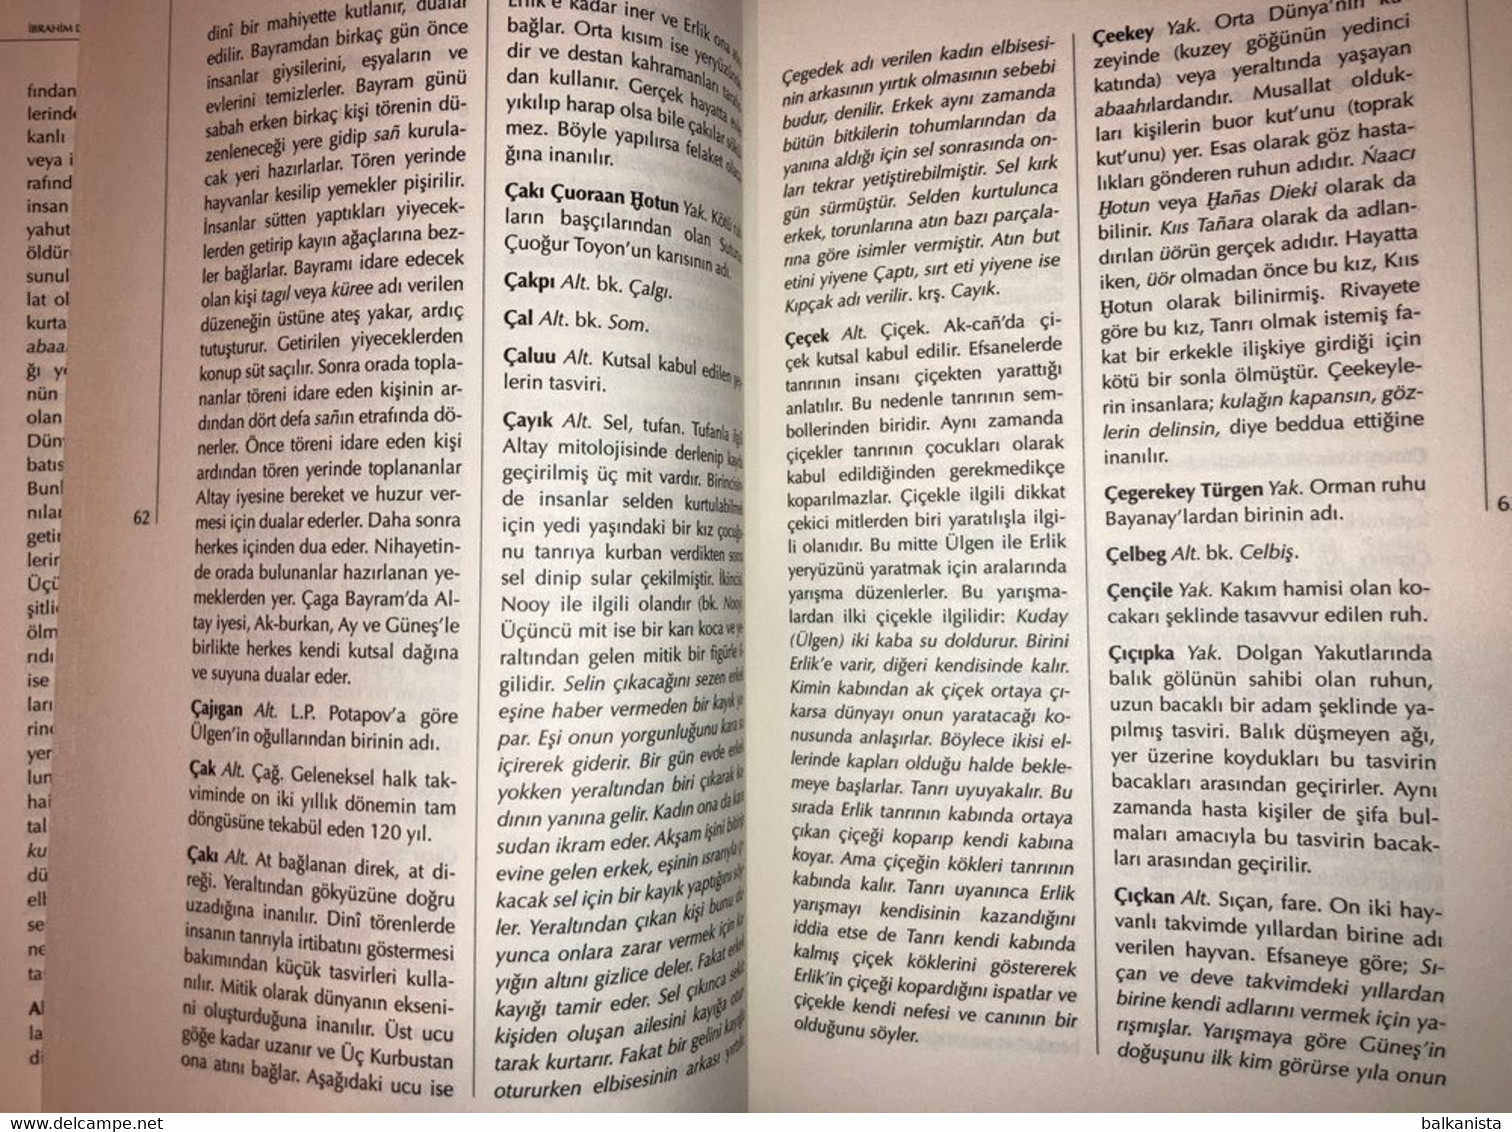 Turk Mitoloji Sozlugu - Turkish Turkic Mythology  Dictionary - Dizionari